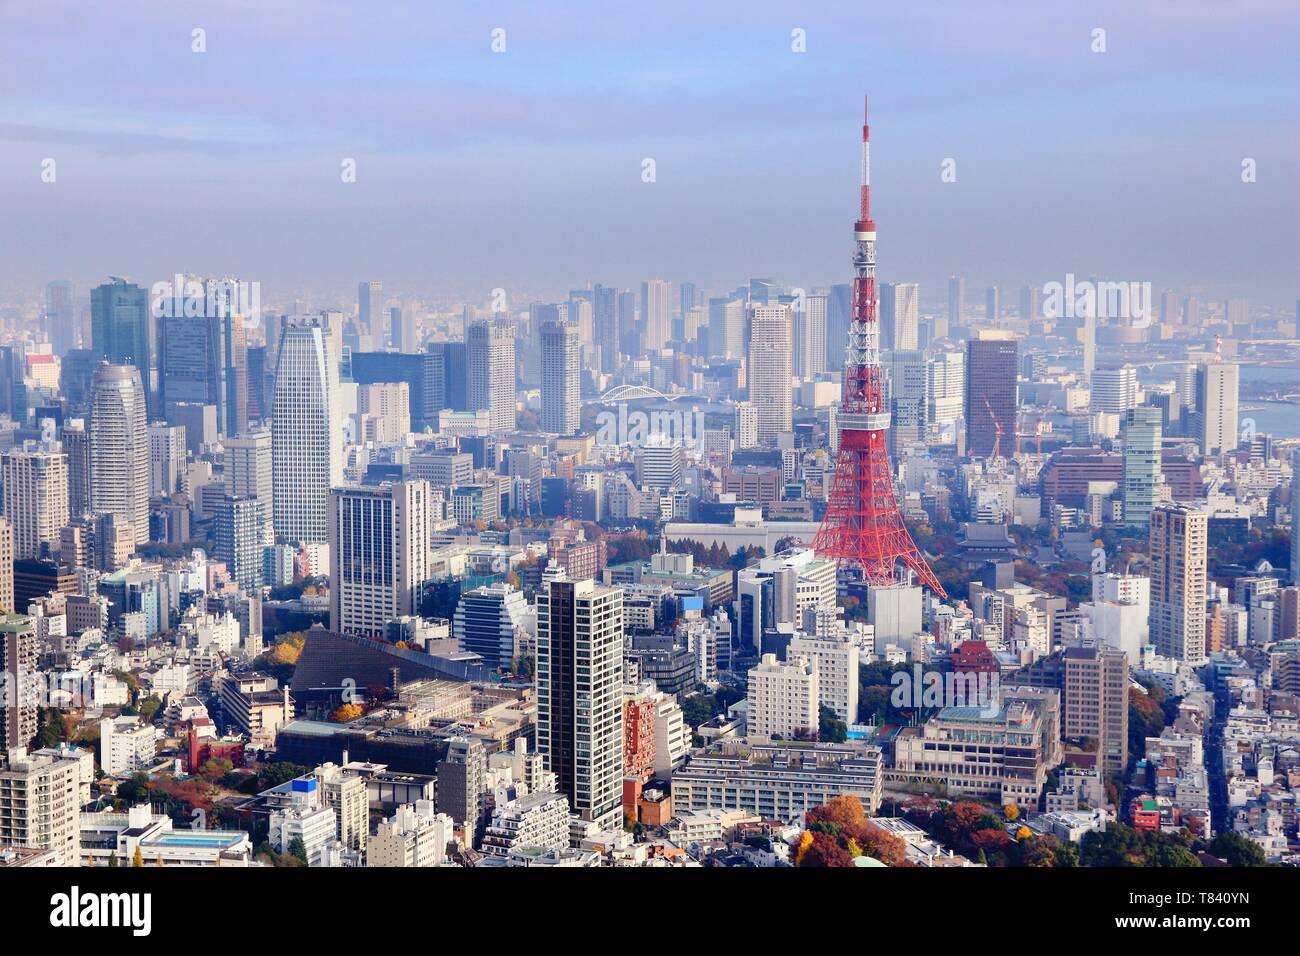 Big city view - Tokyo, Japan. Cityscape photo. Stock Photo